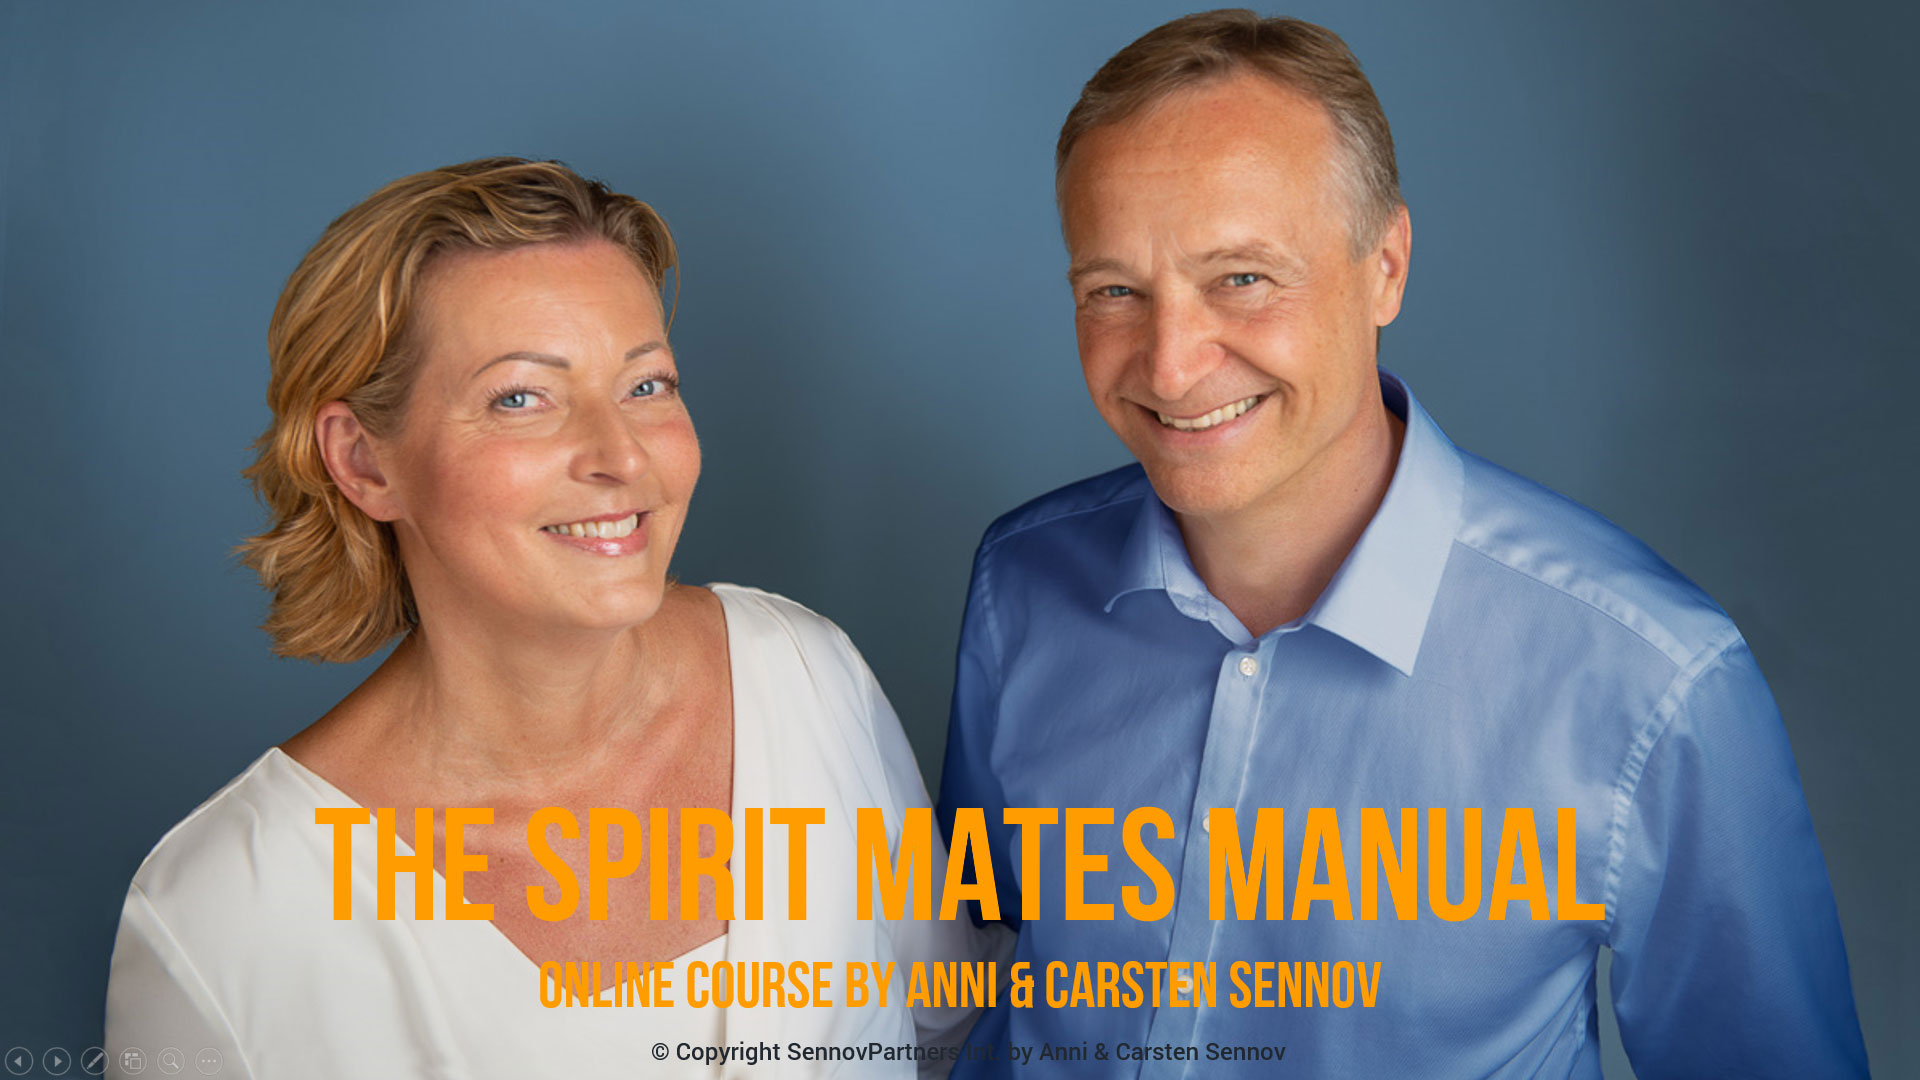 The Spirit Mates Manual